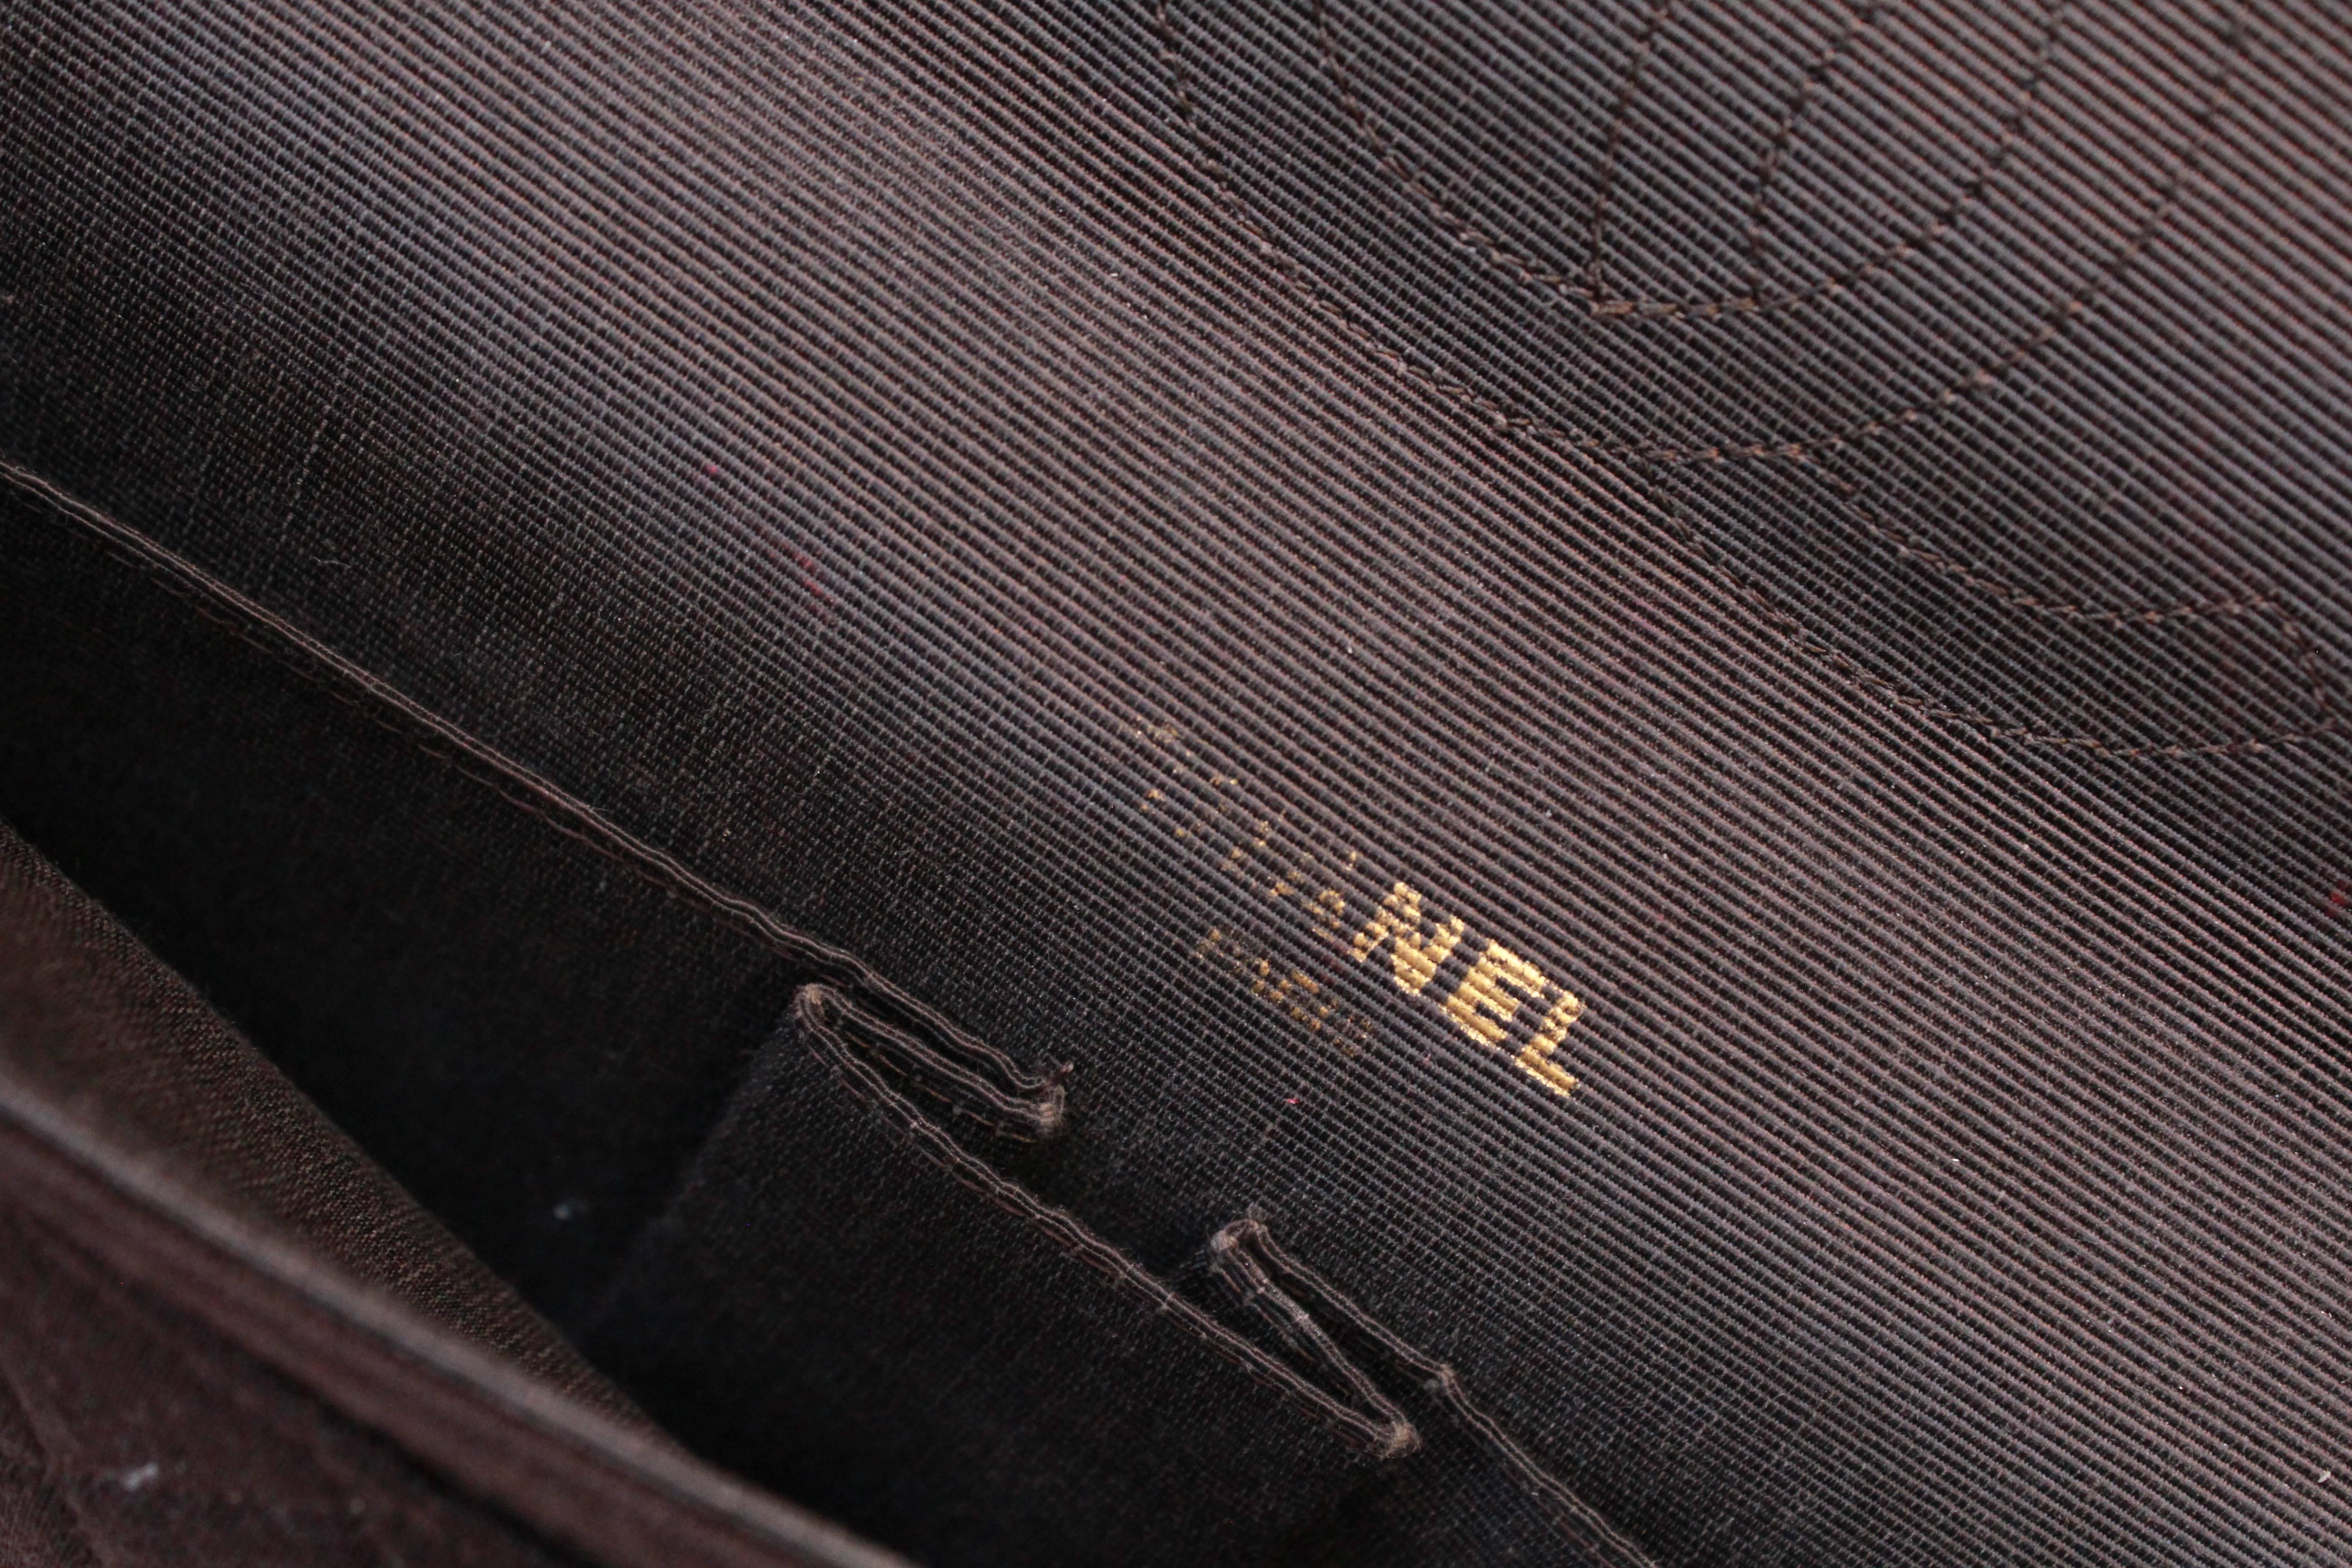 1970-1980s Chanel “Timeless” brown bag 2